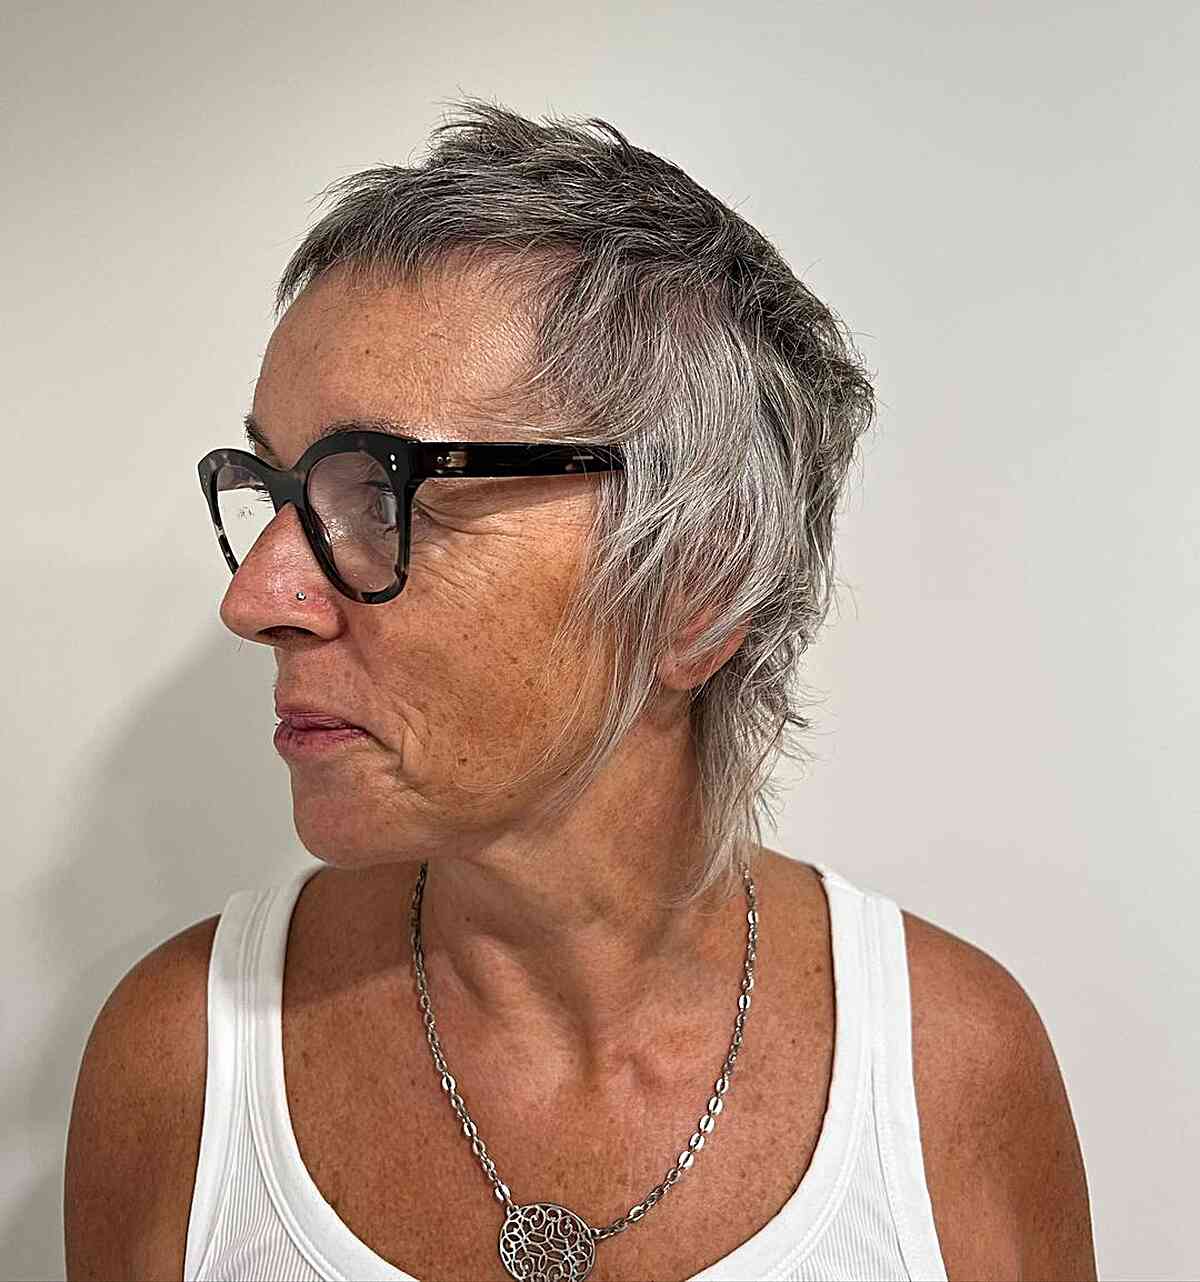 Super Short Pixie Shag on older women aged 60 with glasses